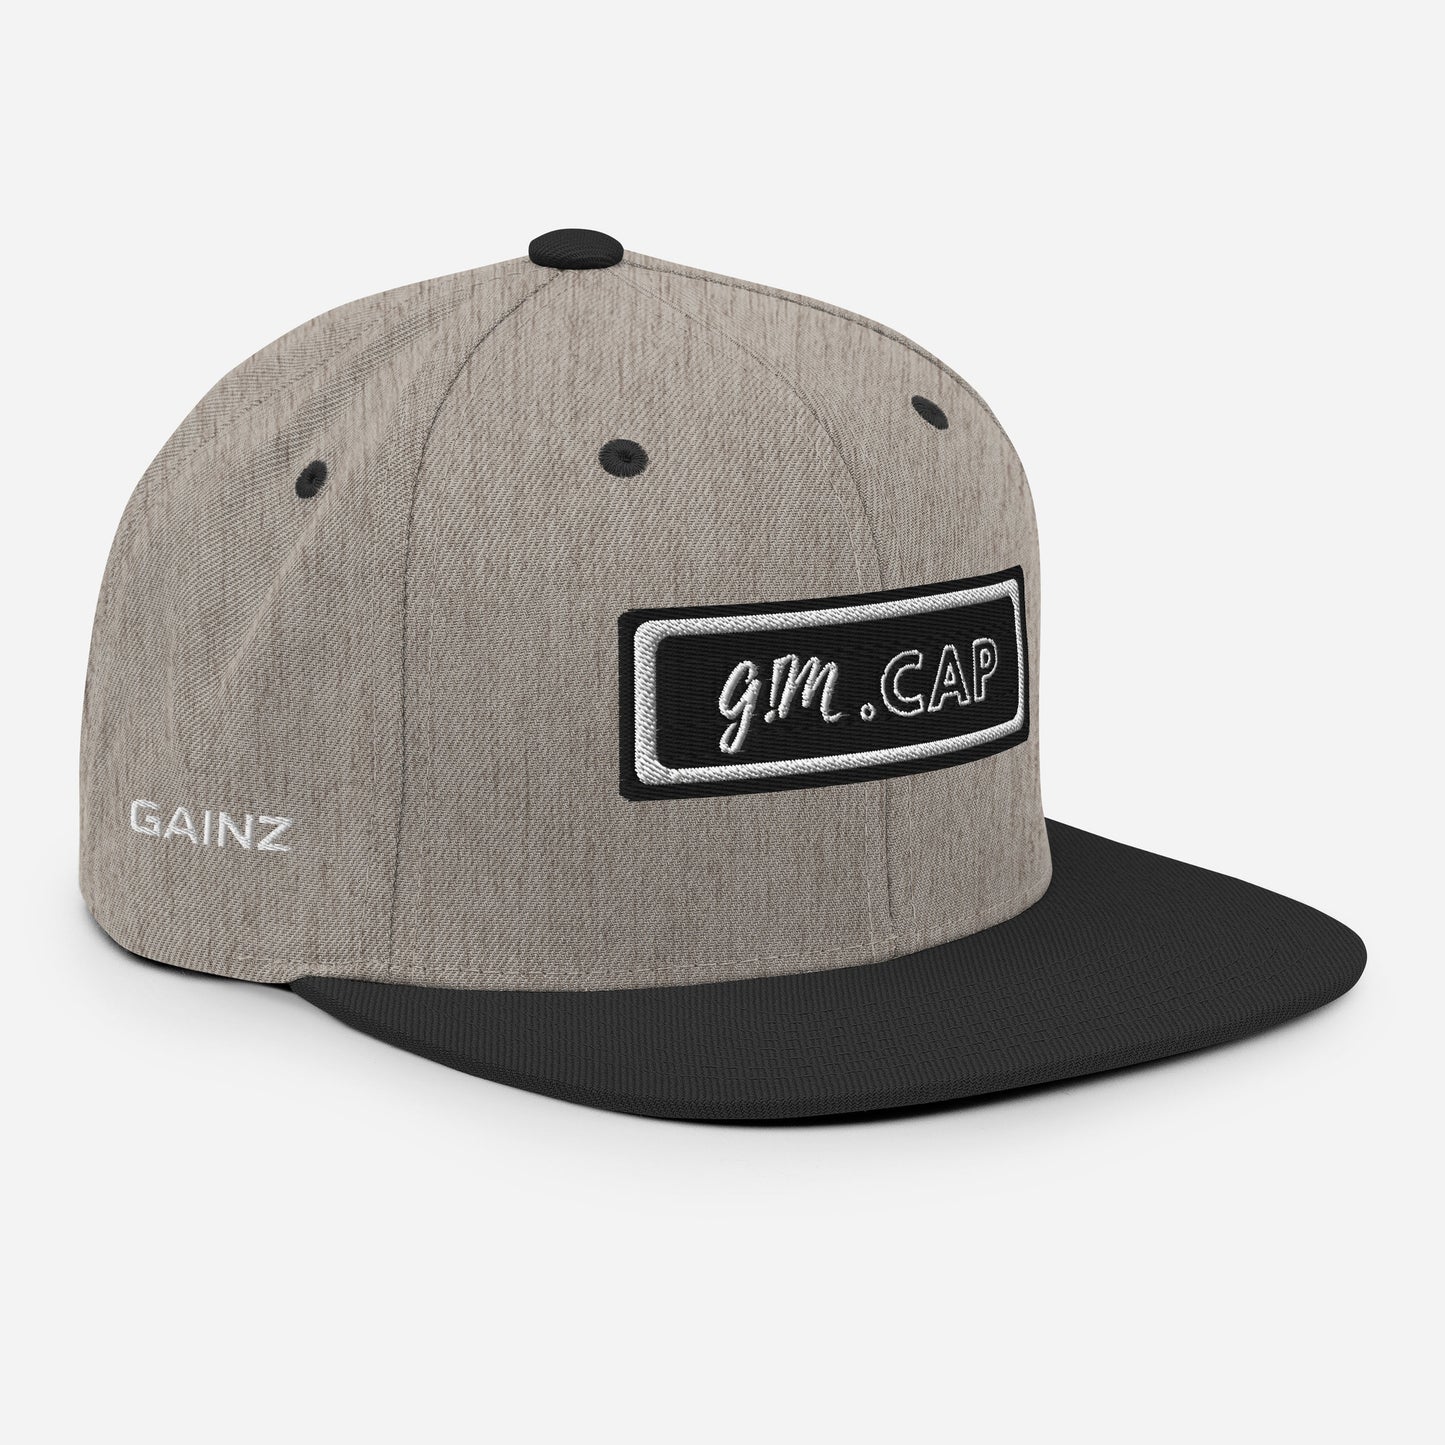 Gym Cap GAINZ - Snapback